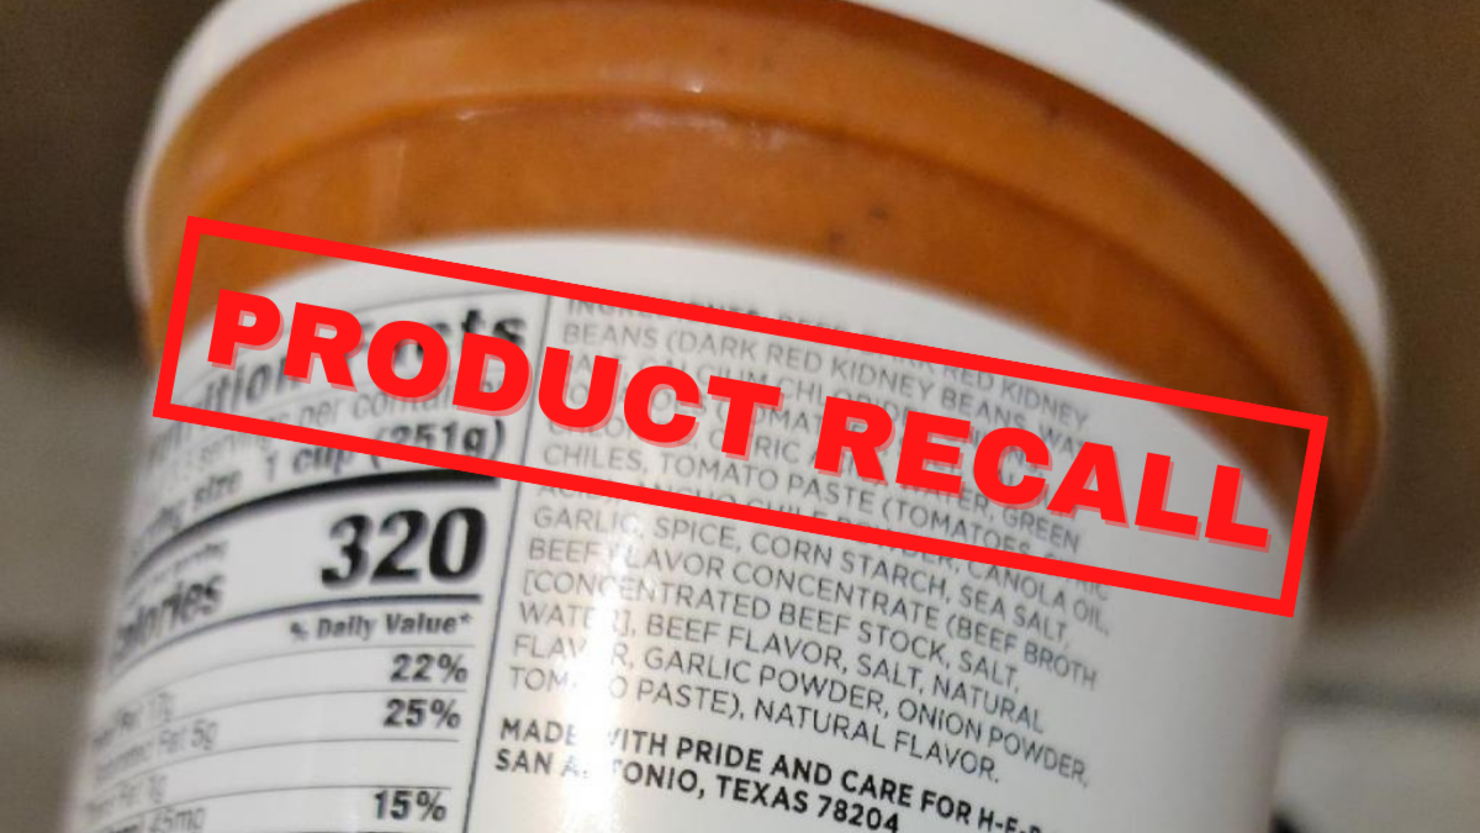 Rao's Brand Soup Recalled Over Label Error